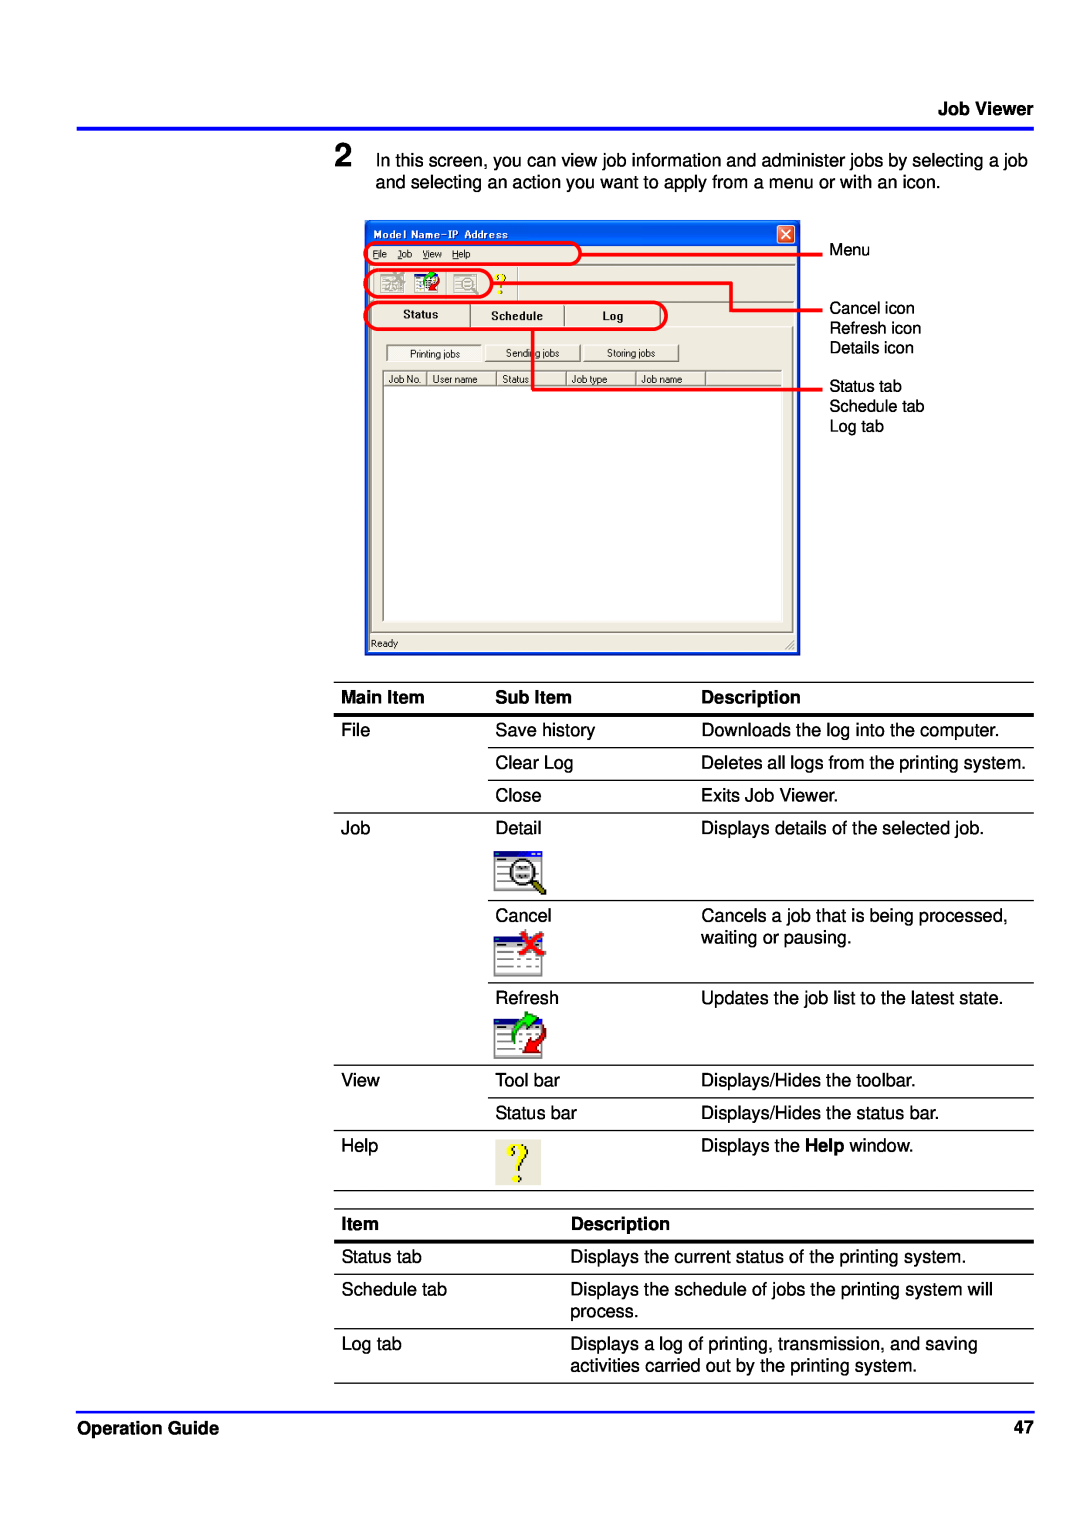 Kyocera KM-NET manual Job Viewer, Main Item, Sub Item, Description, Operation Guide 